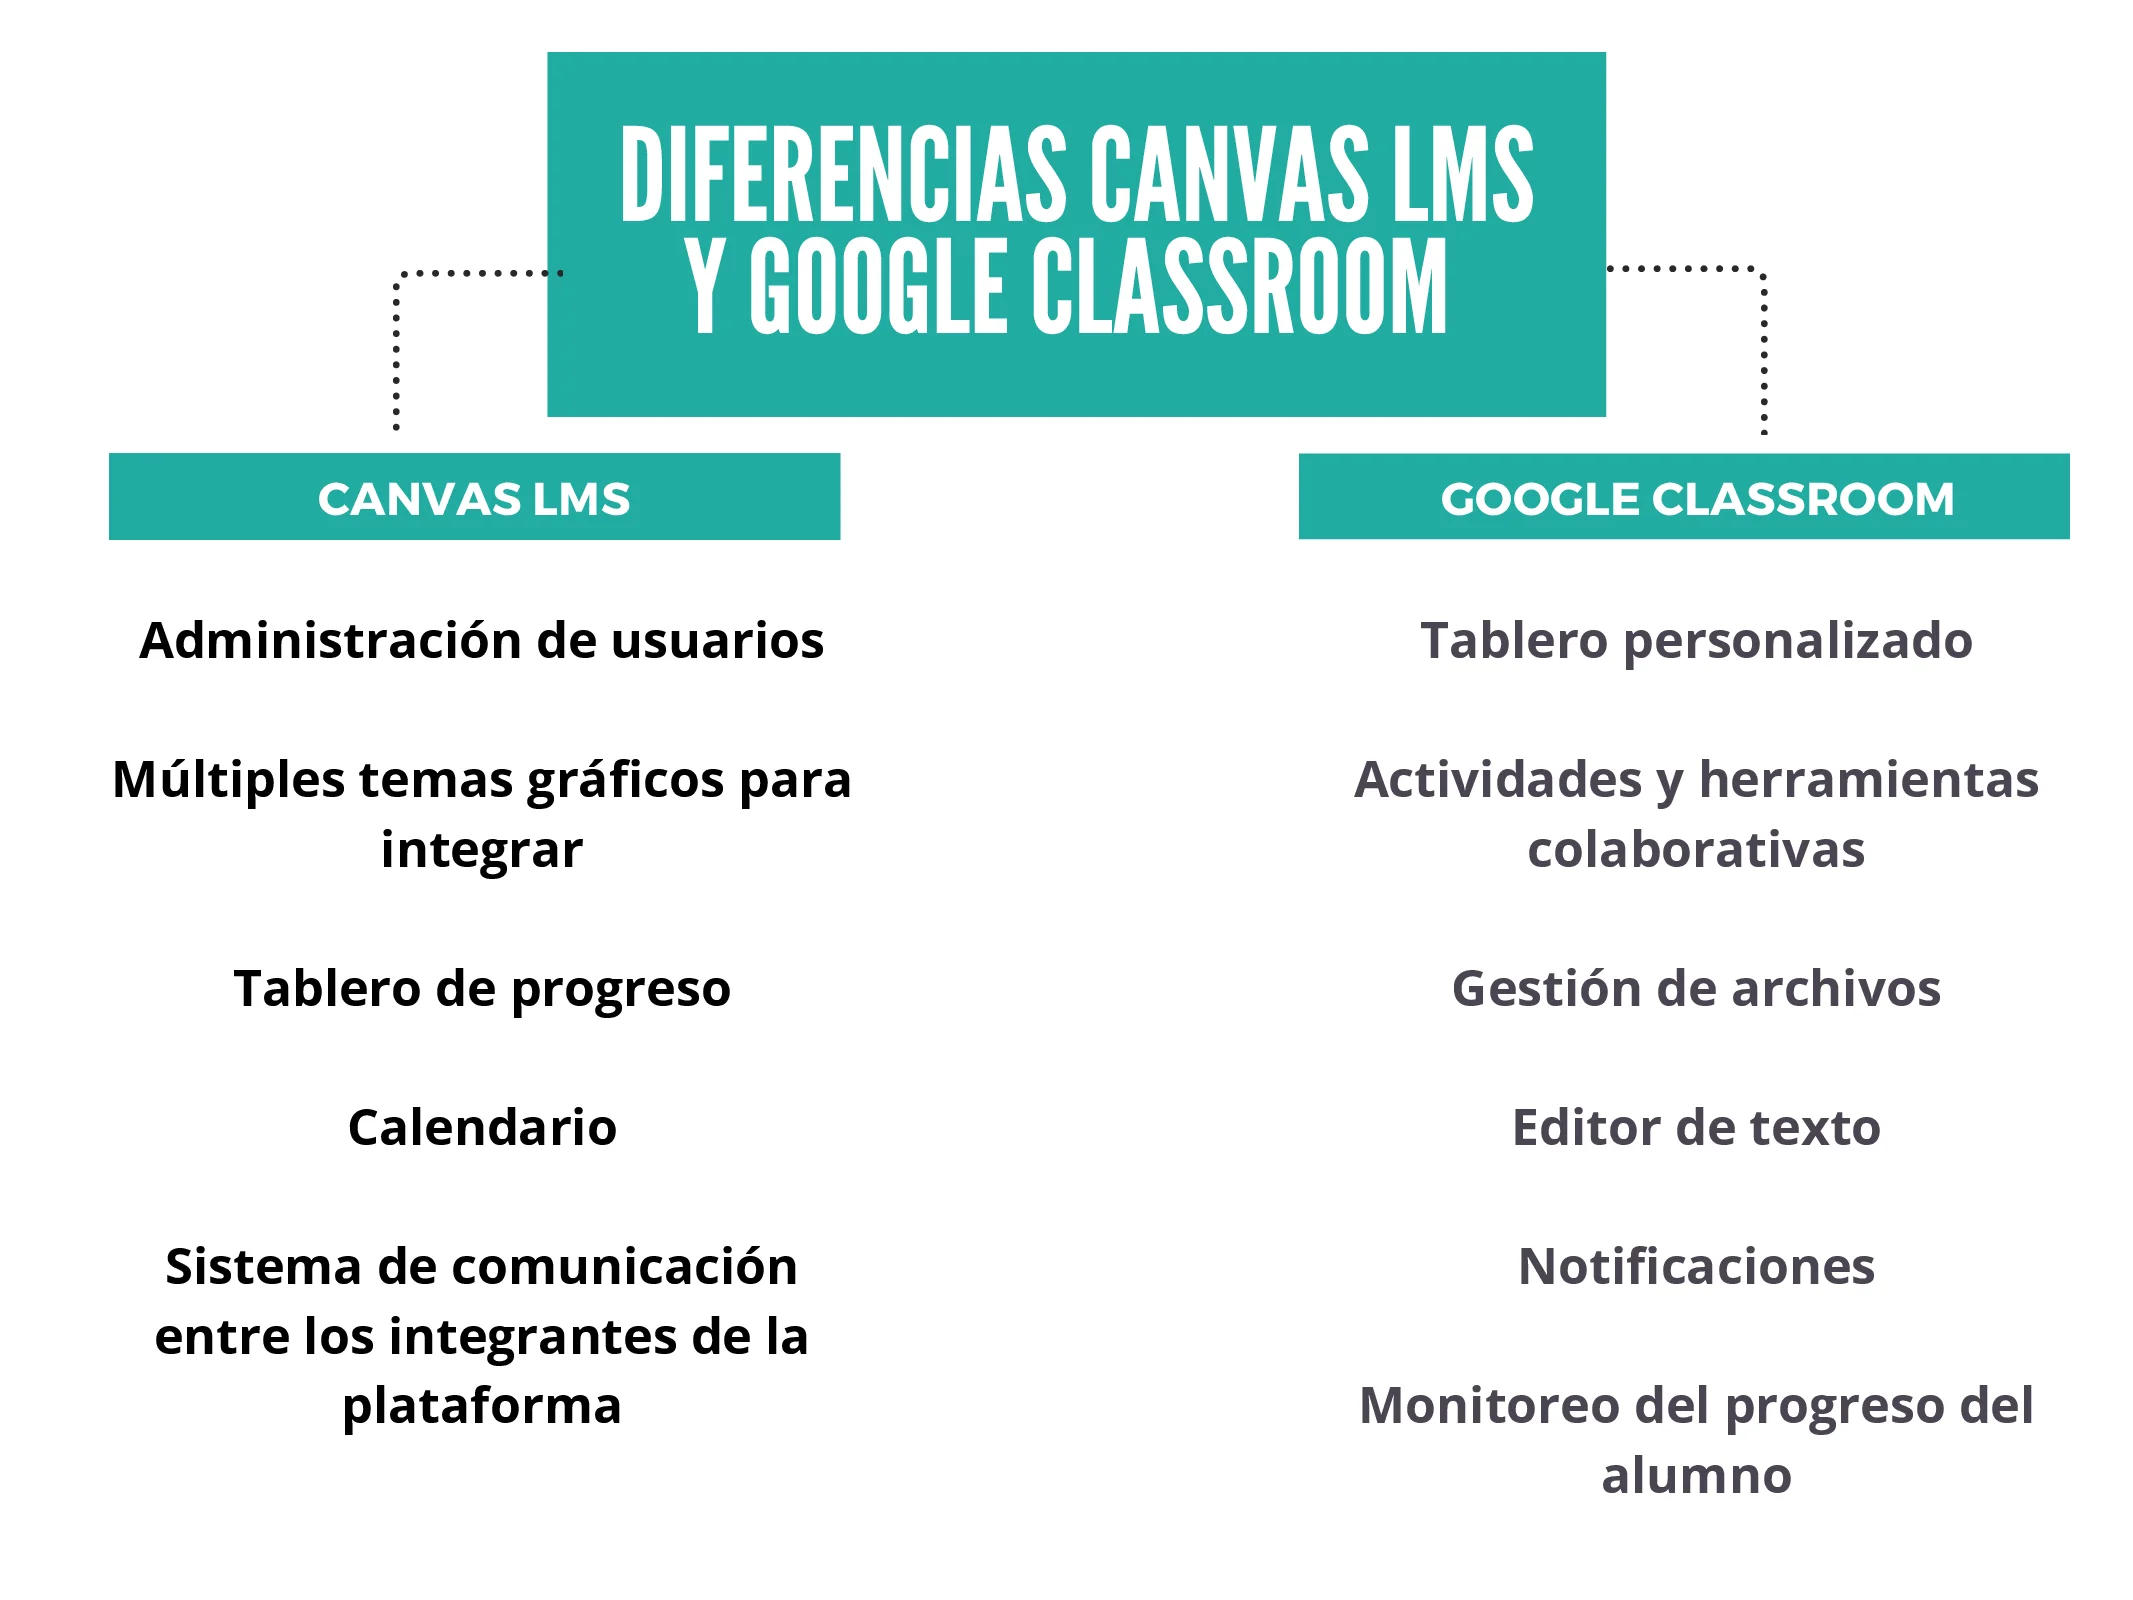 Che cos'è GoogleClassroom